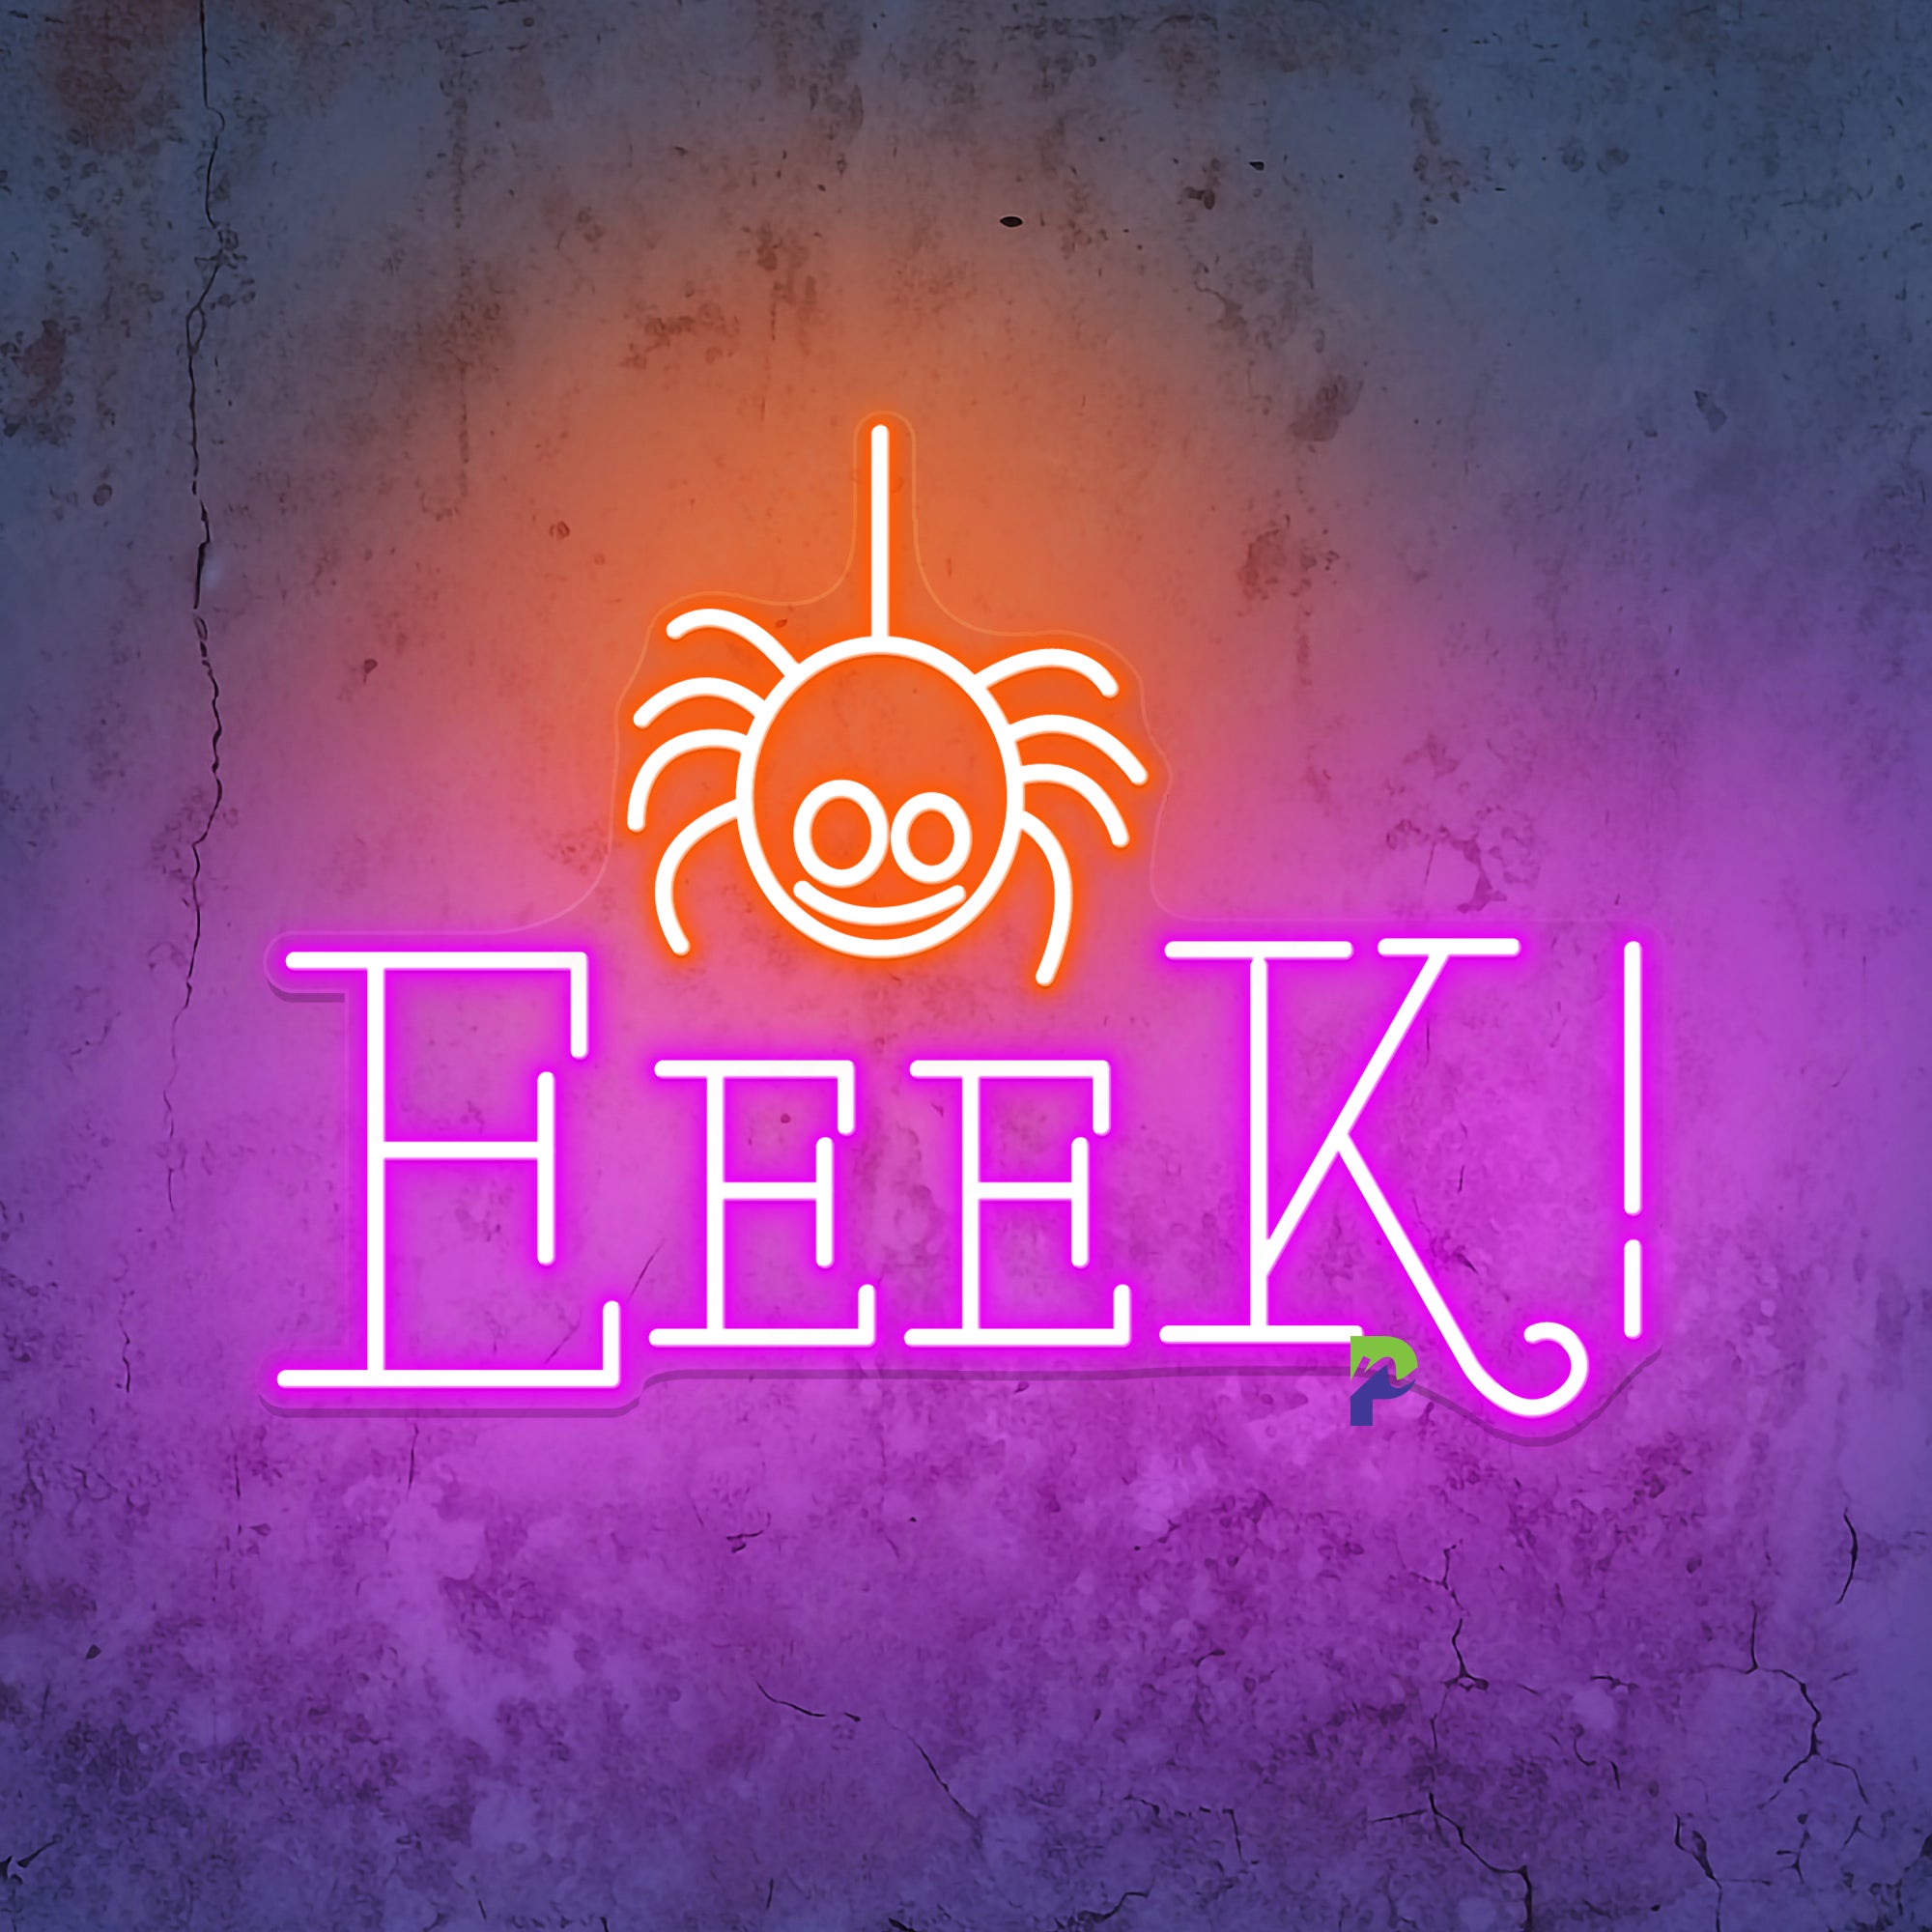 Eek Neon Spider Sign Led Light For Halloween